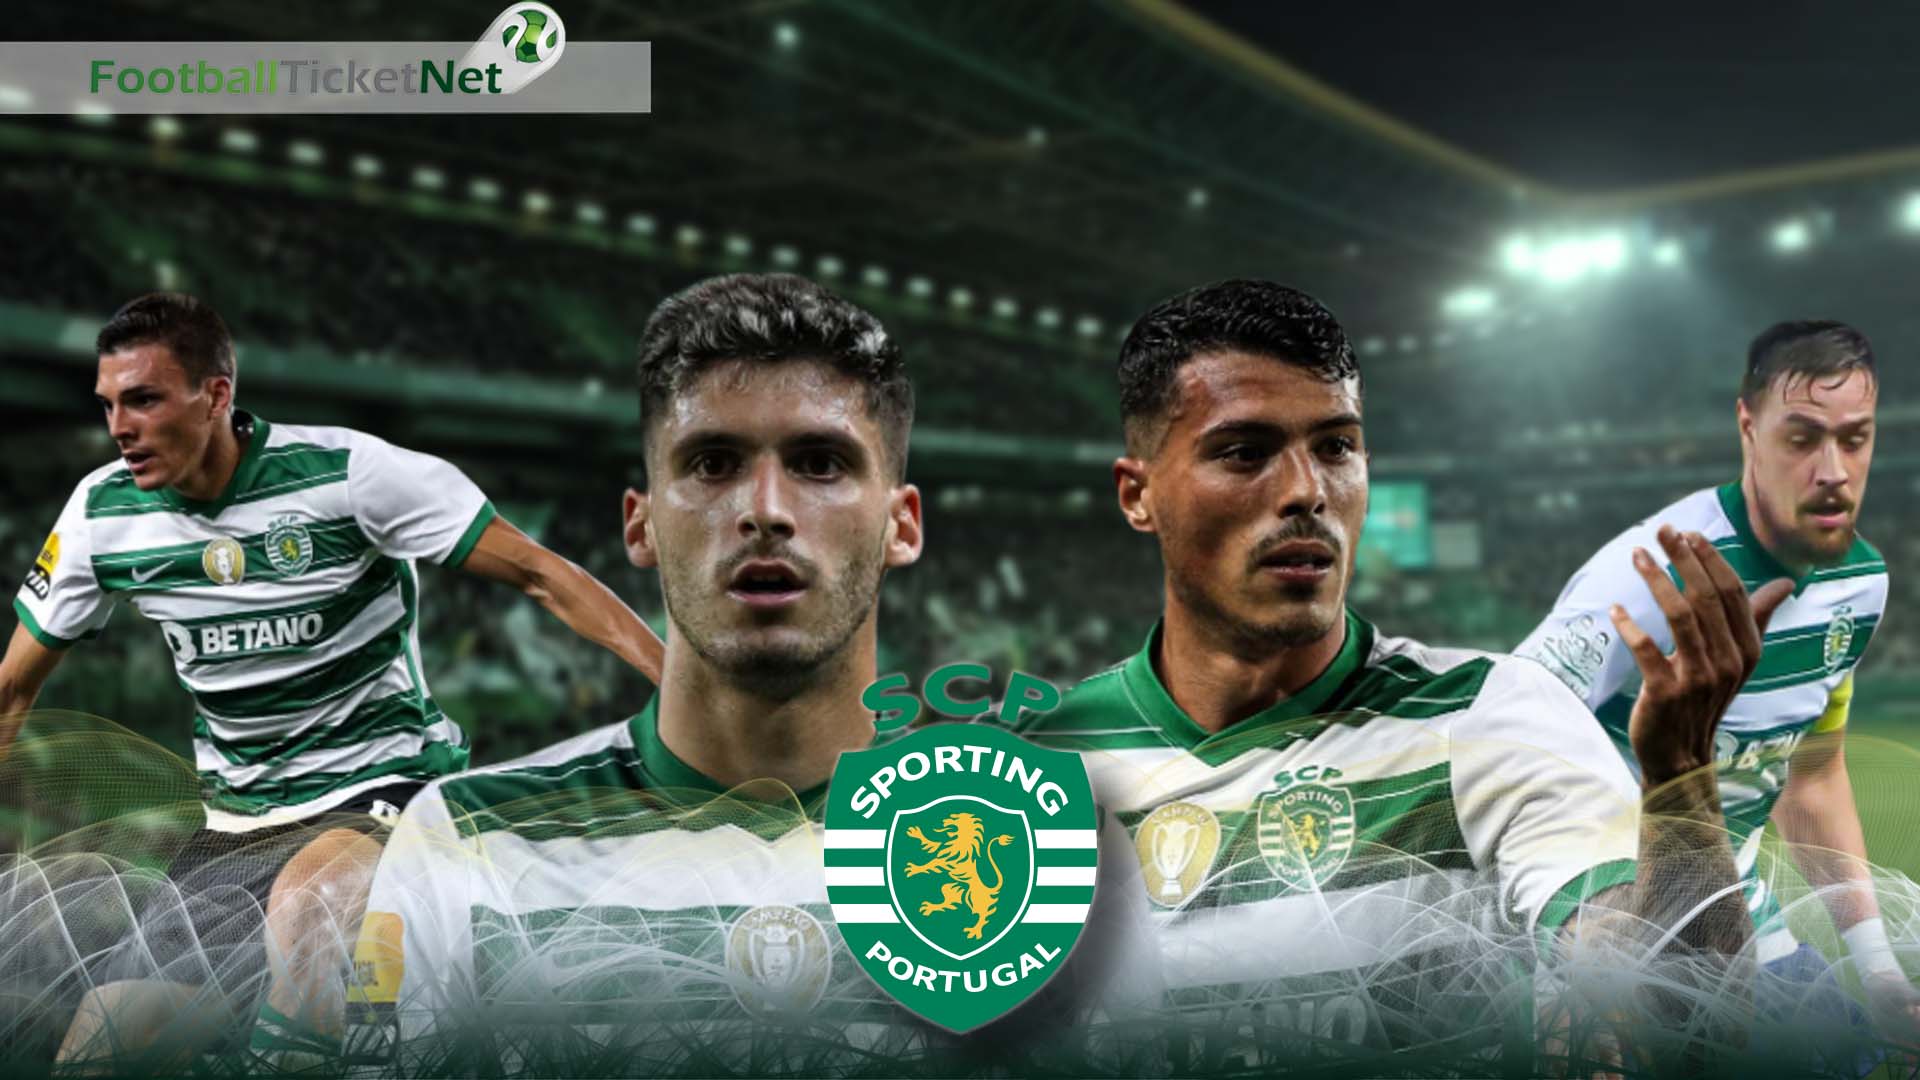 Sporting Lisbon Tickets 2018/19 Season | Football Ticket Net